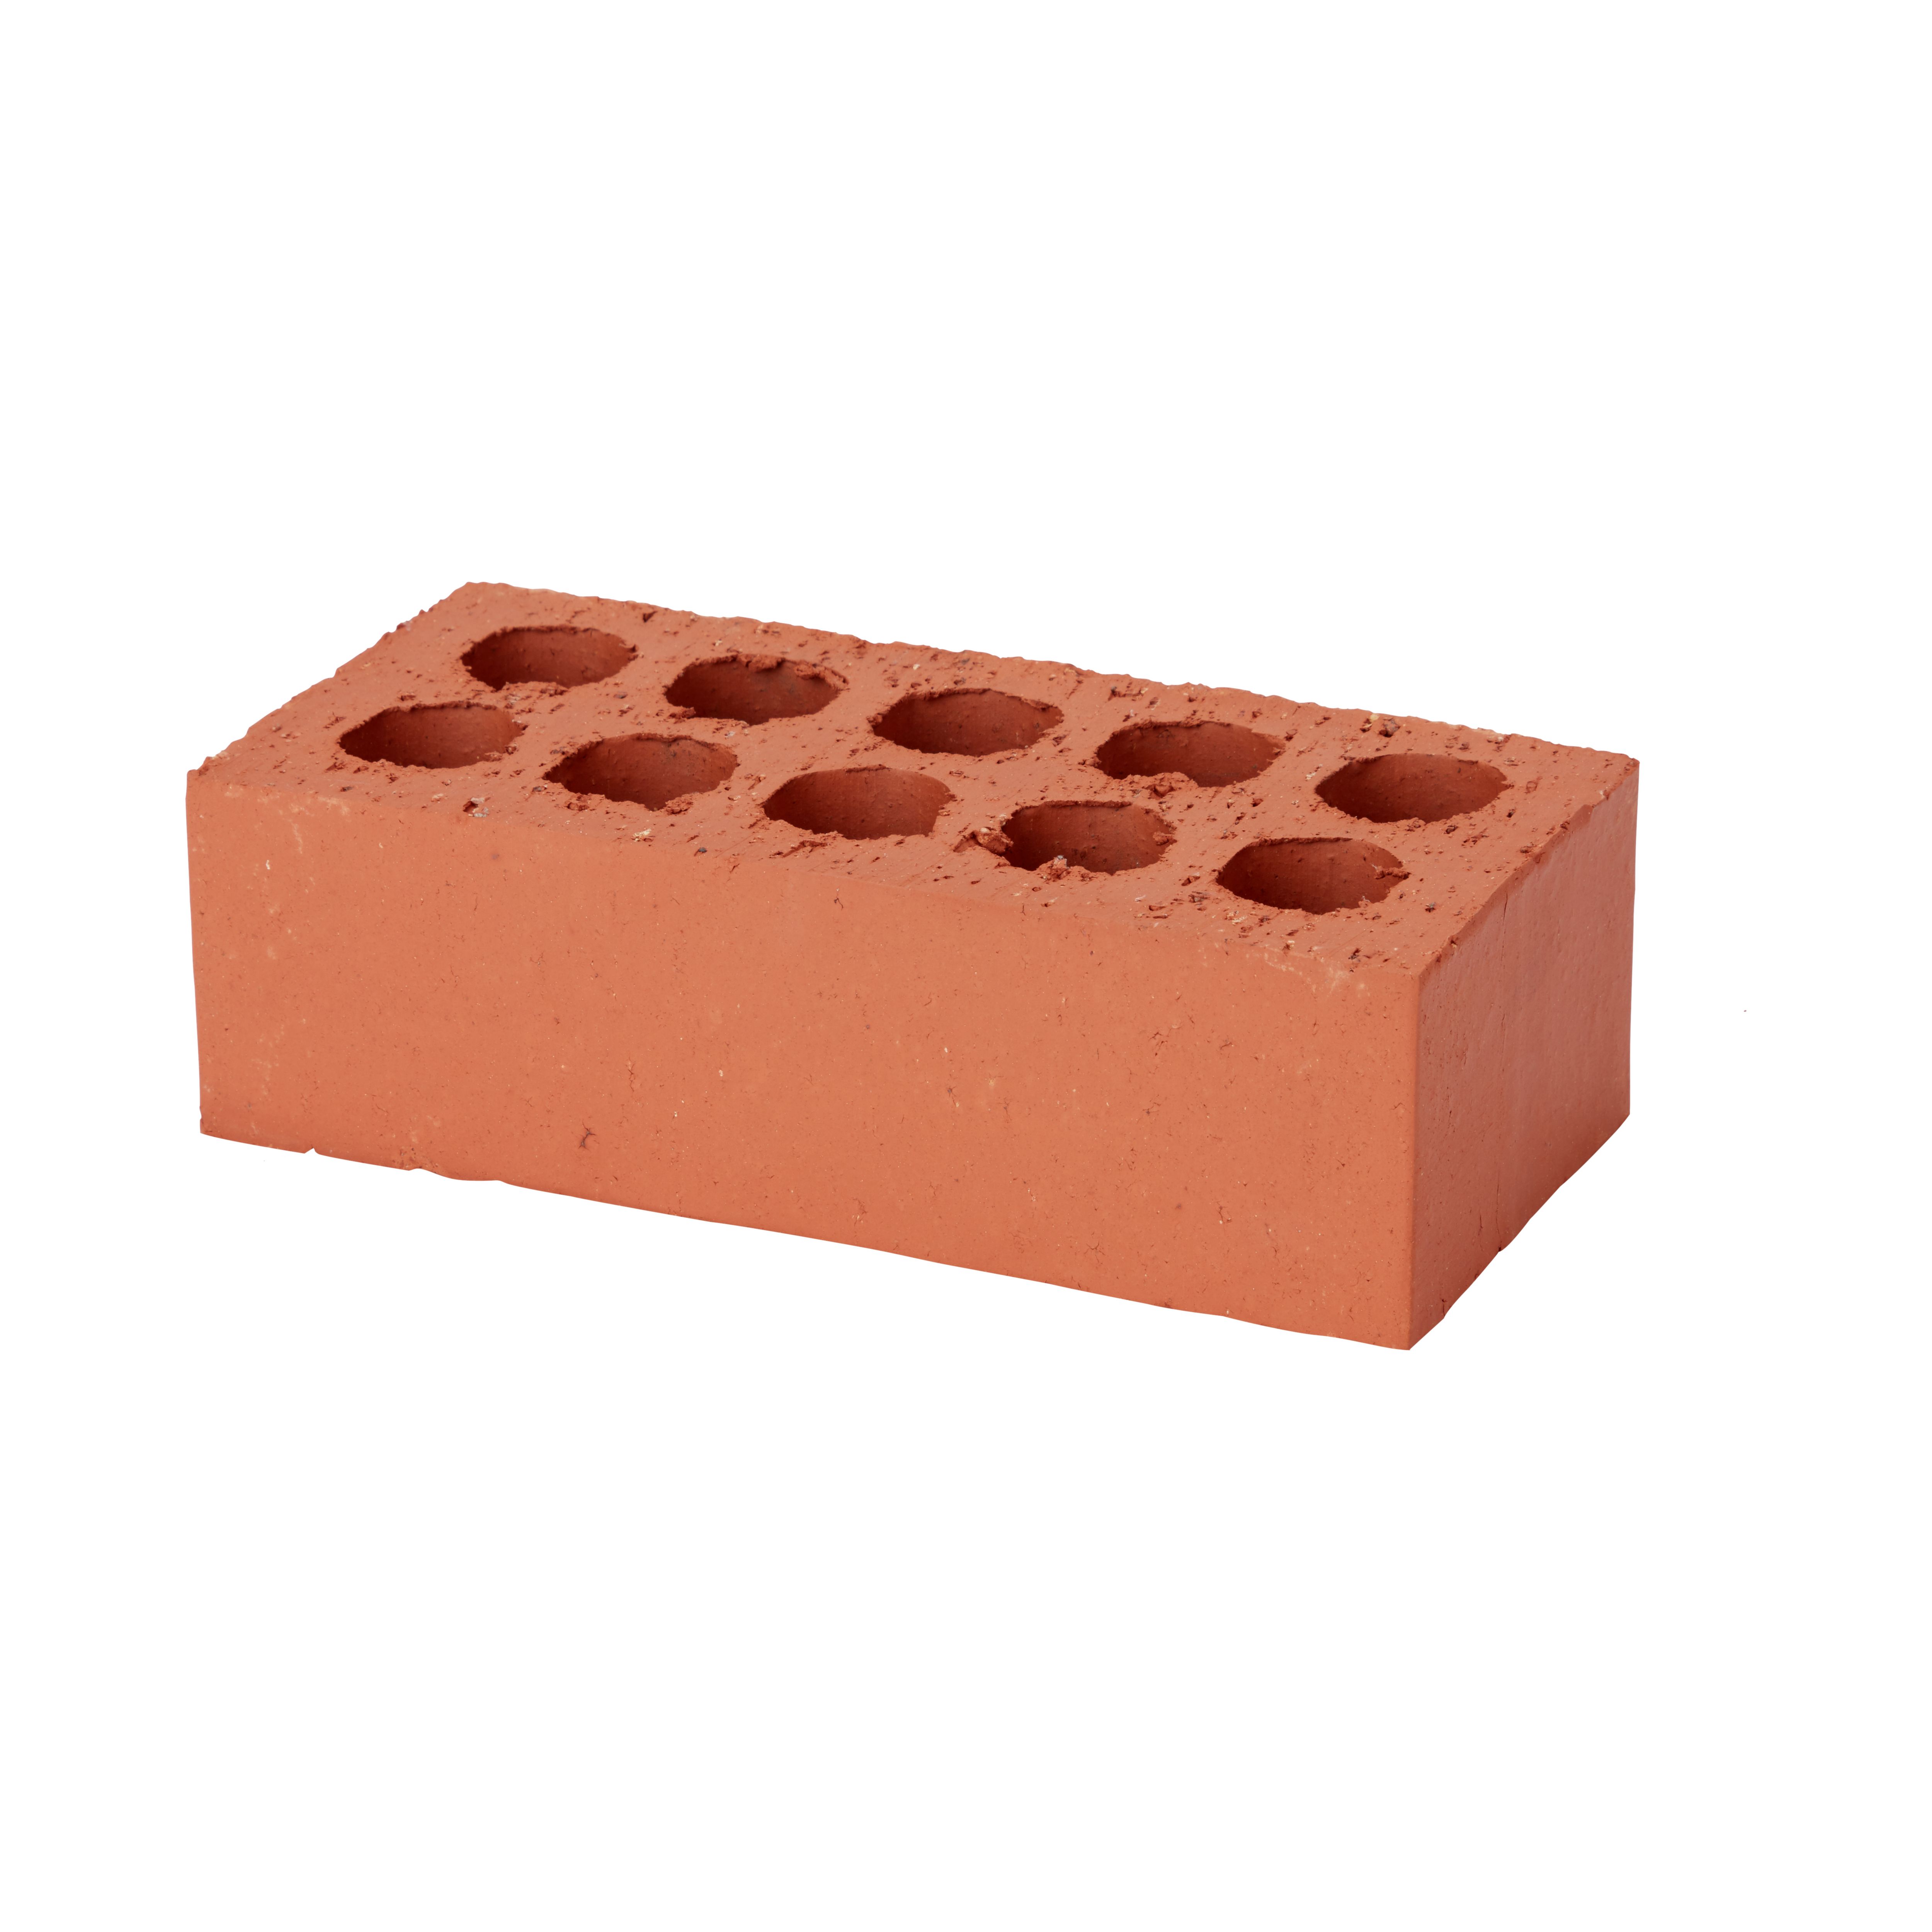 A foam bricks measuring 110 mm × 45 mm × 40 mm